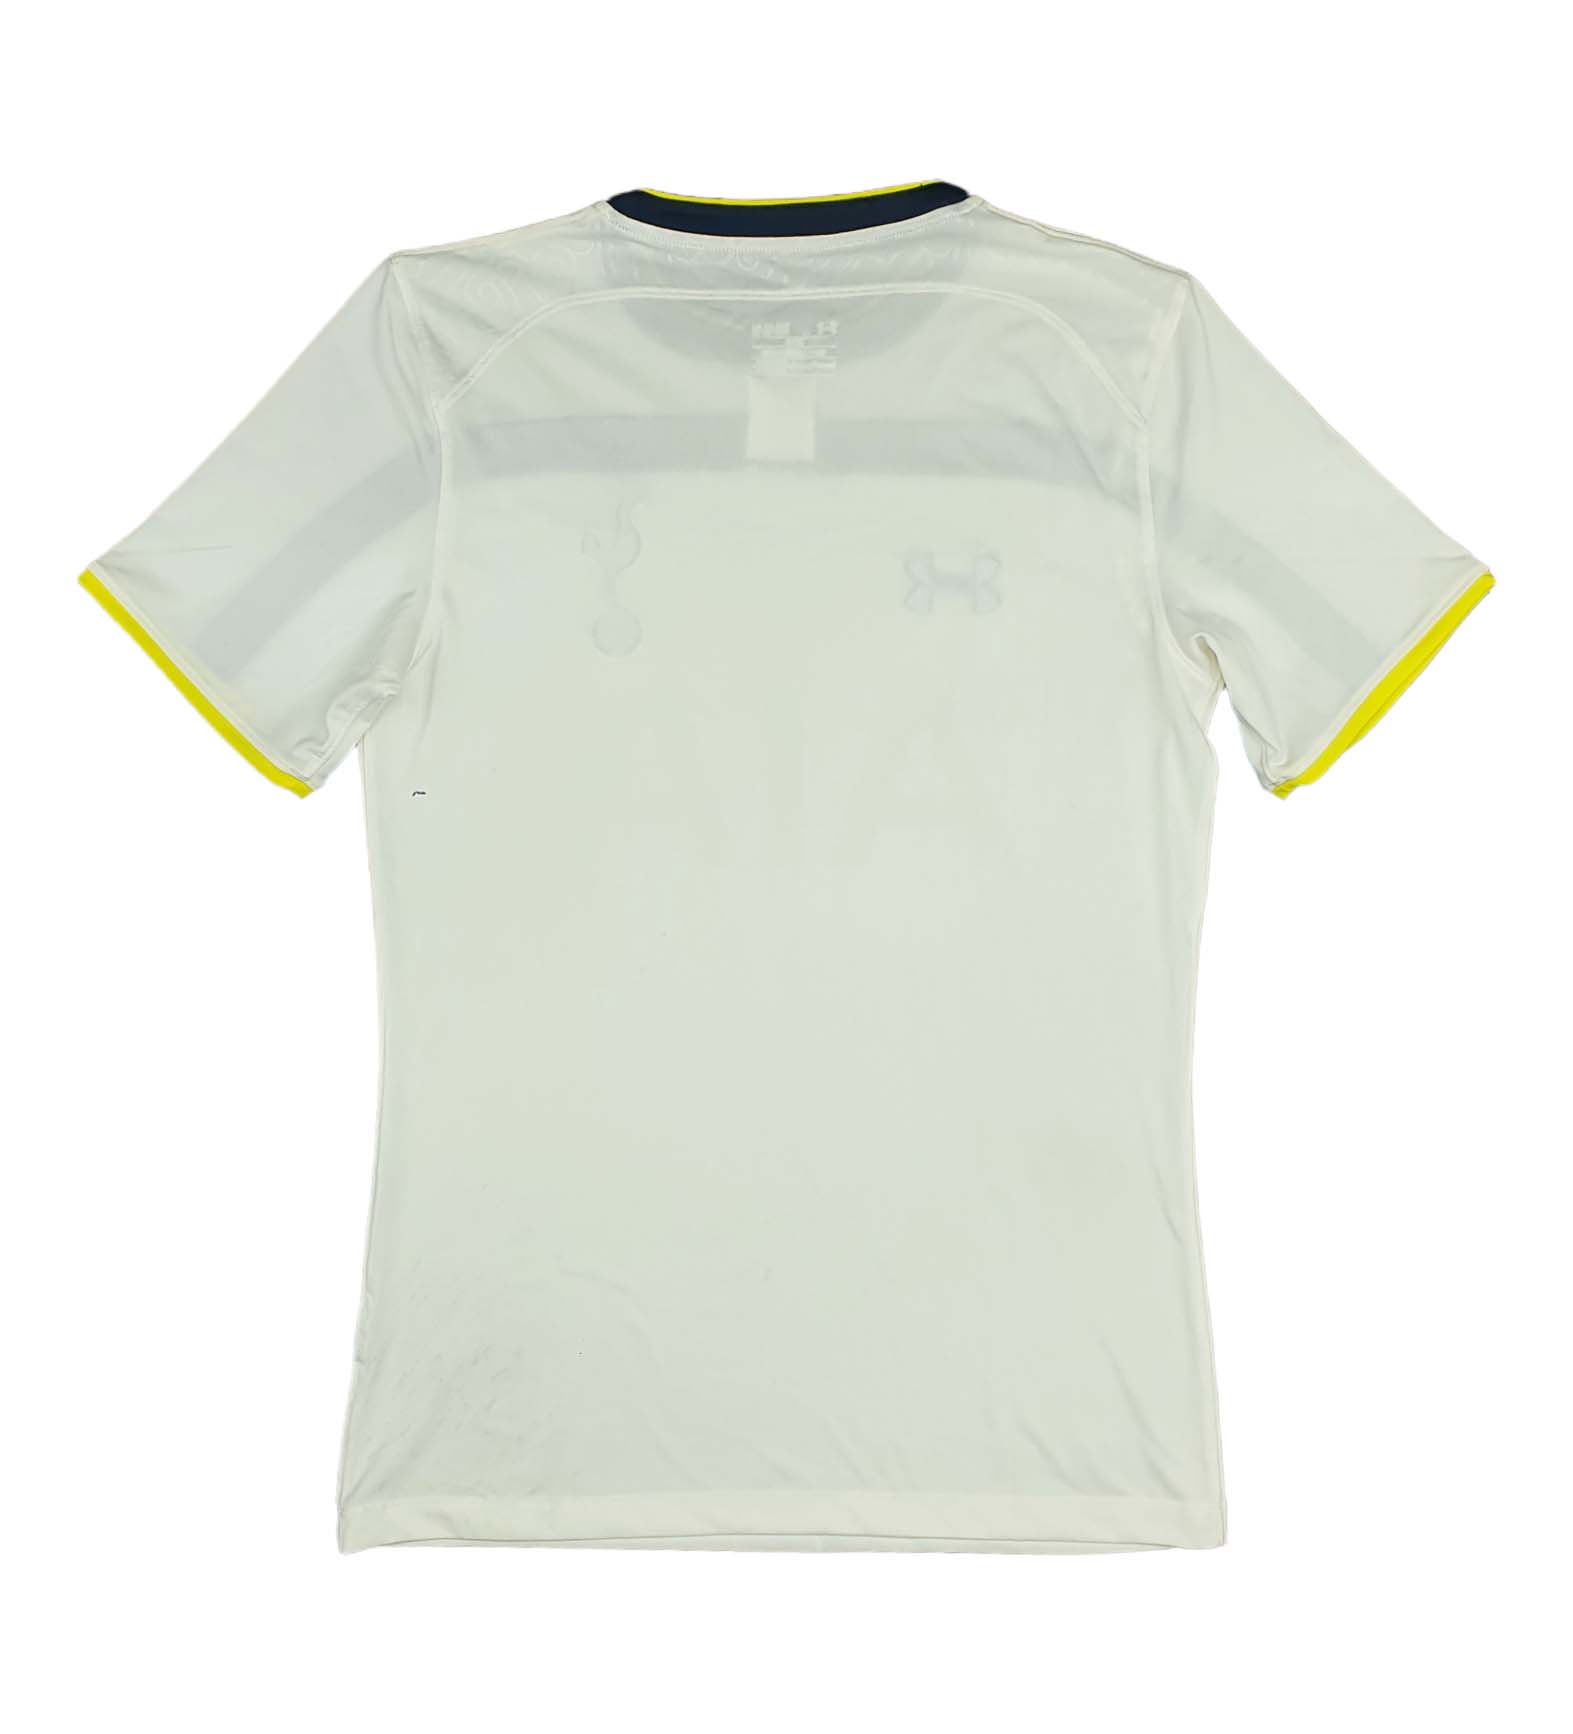 Maillot Tottenham Hotspur FC 2014/2015 Uomo Vestiti Abbigliamento sportivo Maglie e t-shirt Under Armour Maglie e t-shirt 